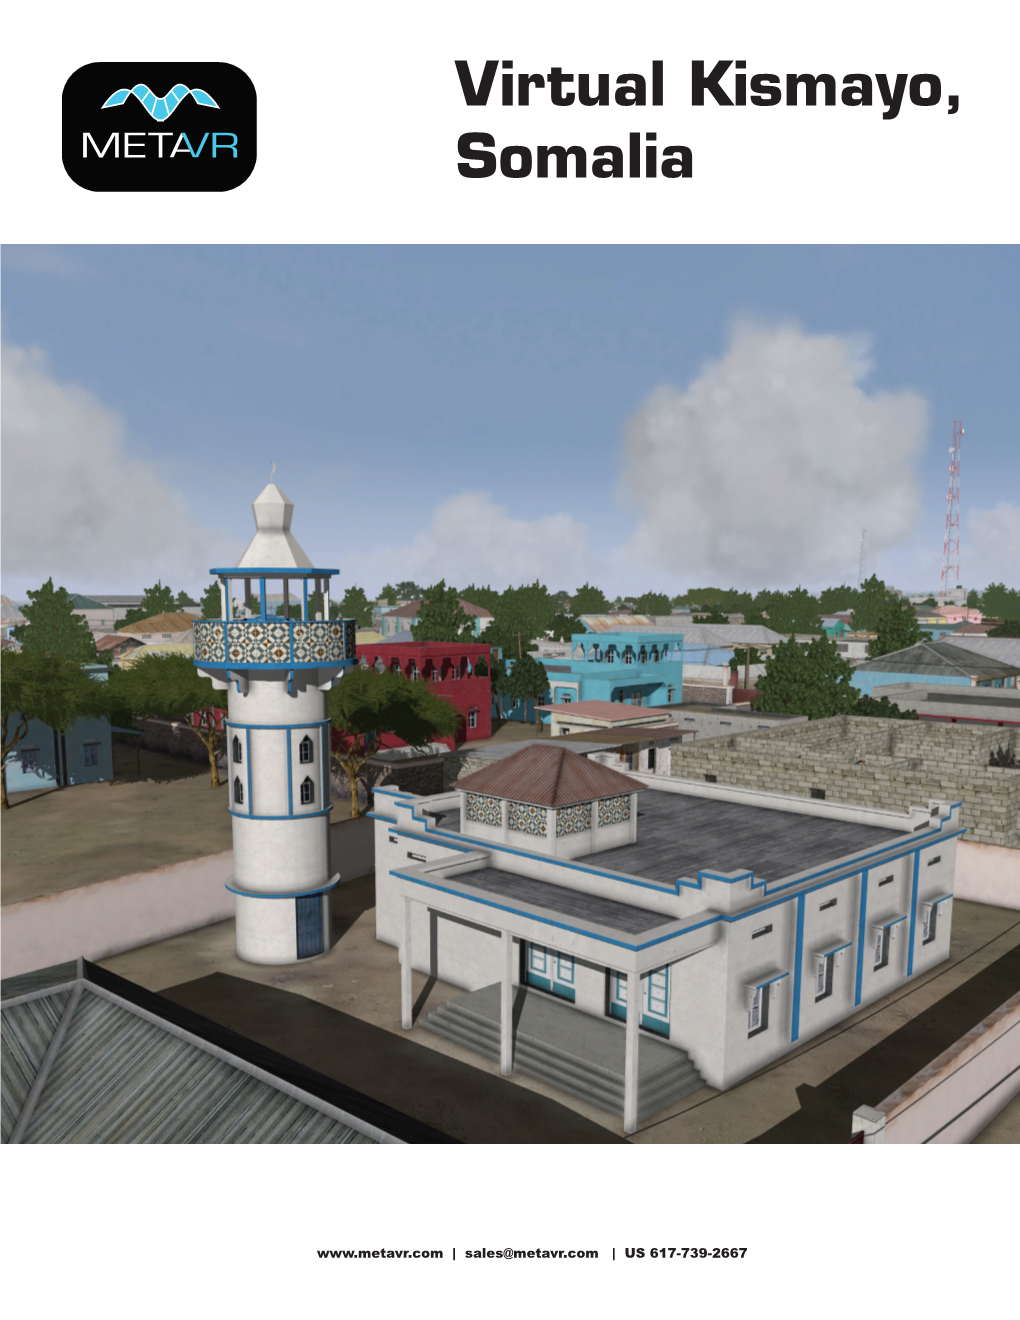 Virtual Kismayo, Somalia